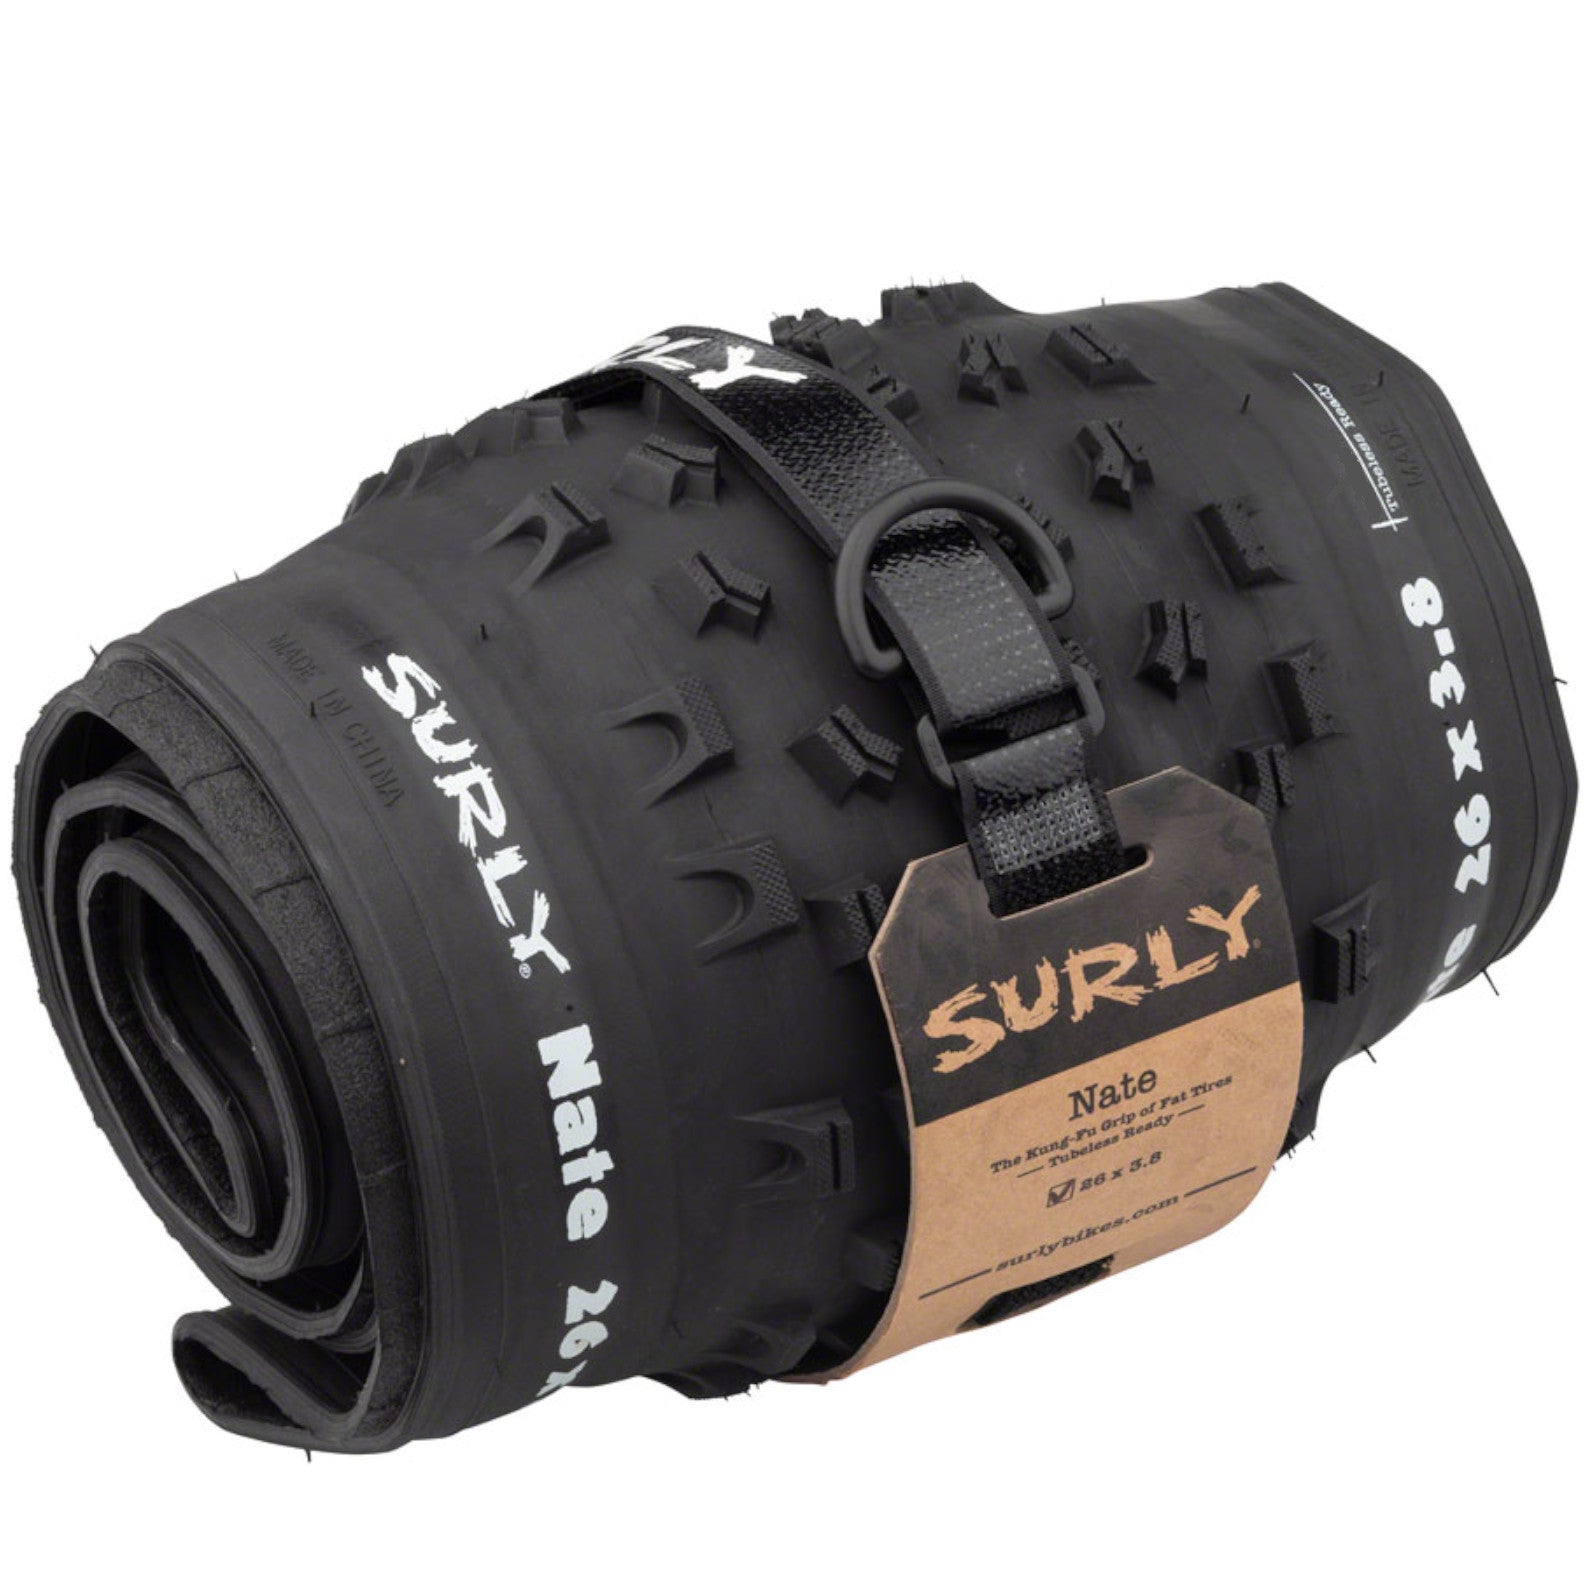 Surly Nate 26x3.8 Tubeless Folding Tire 60tpi